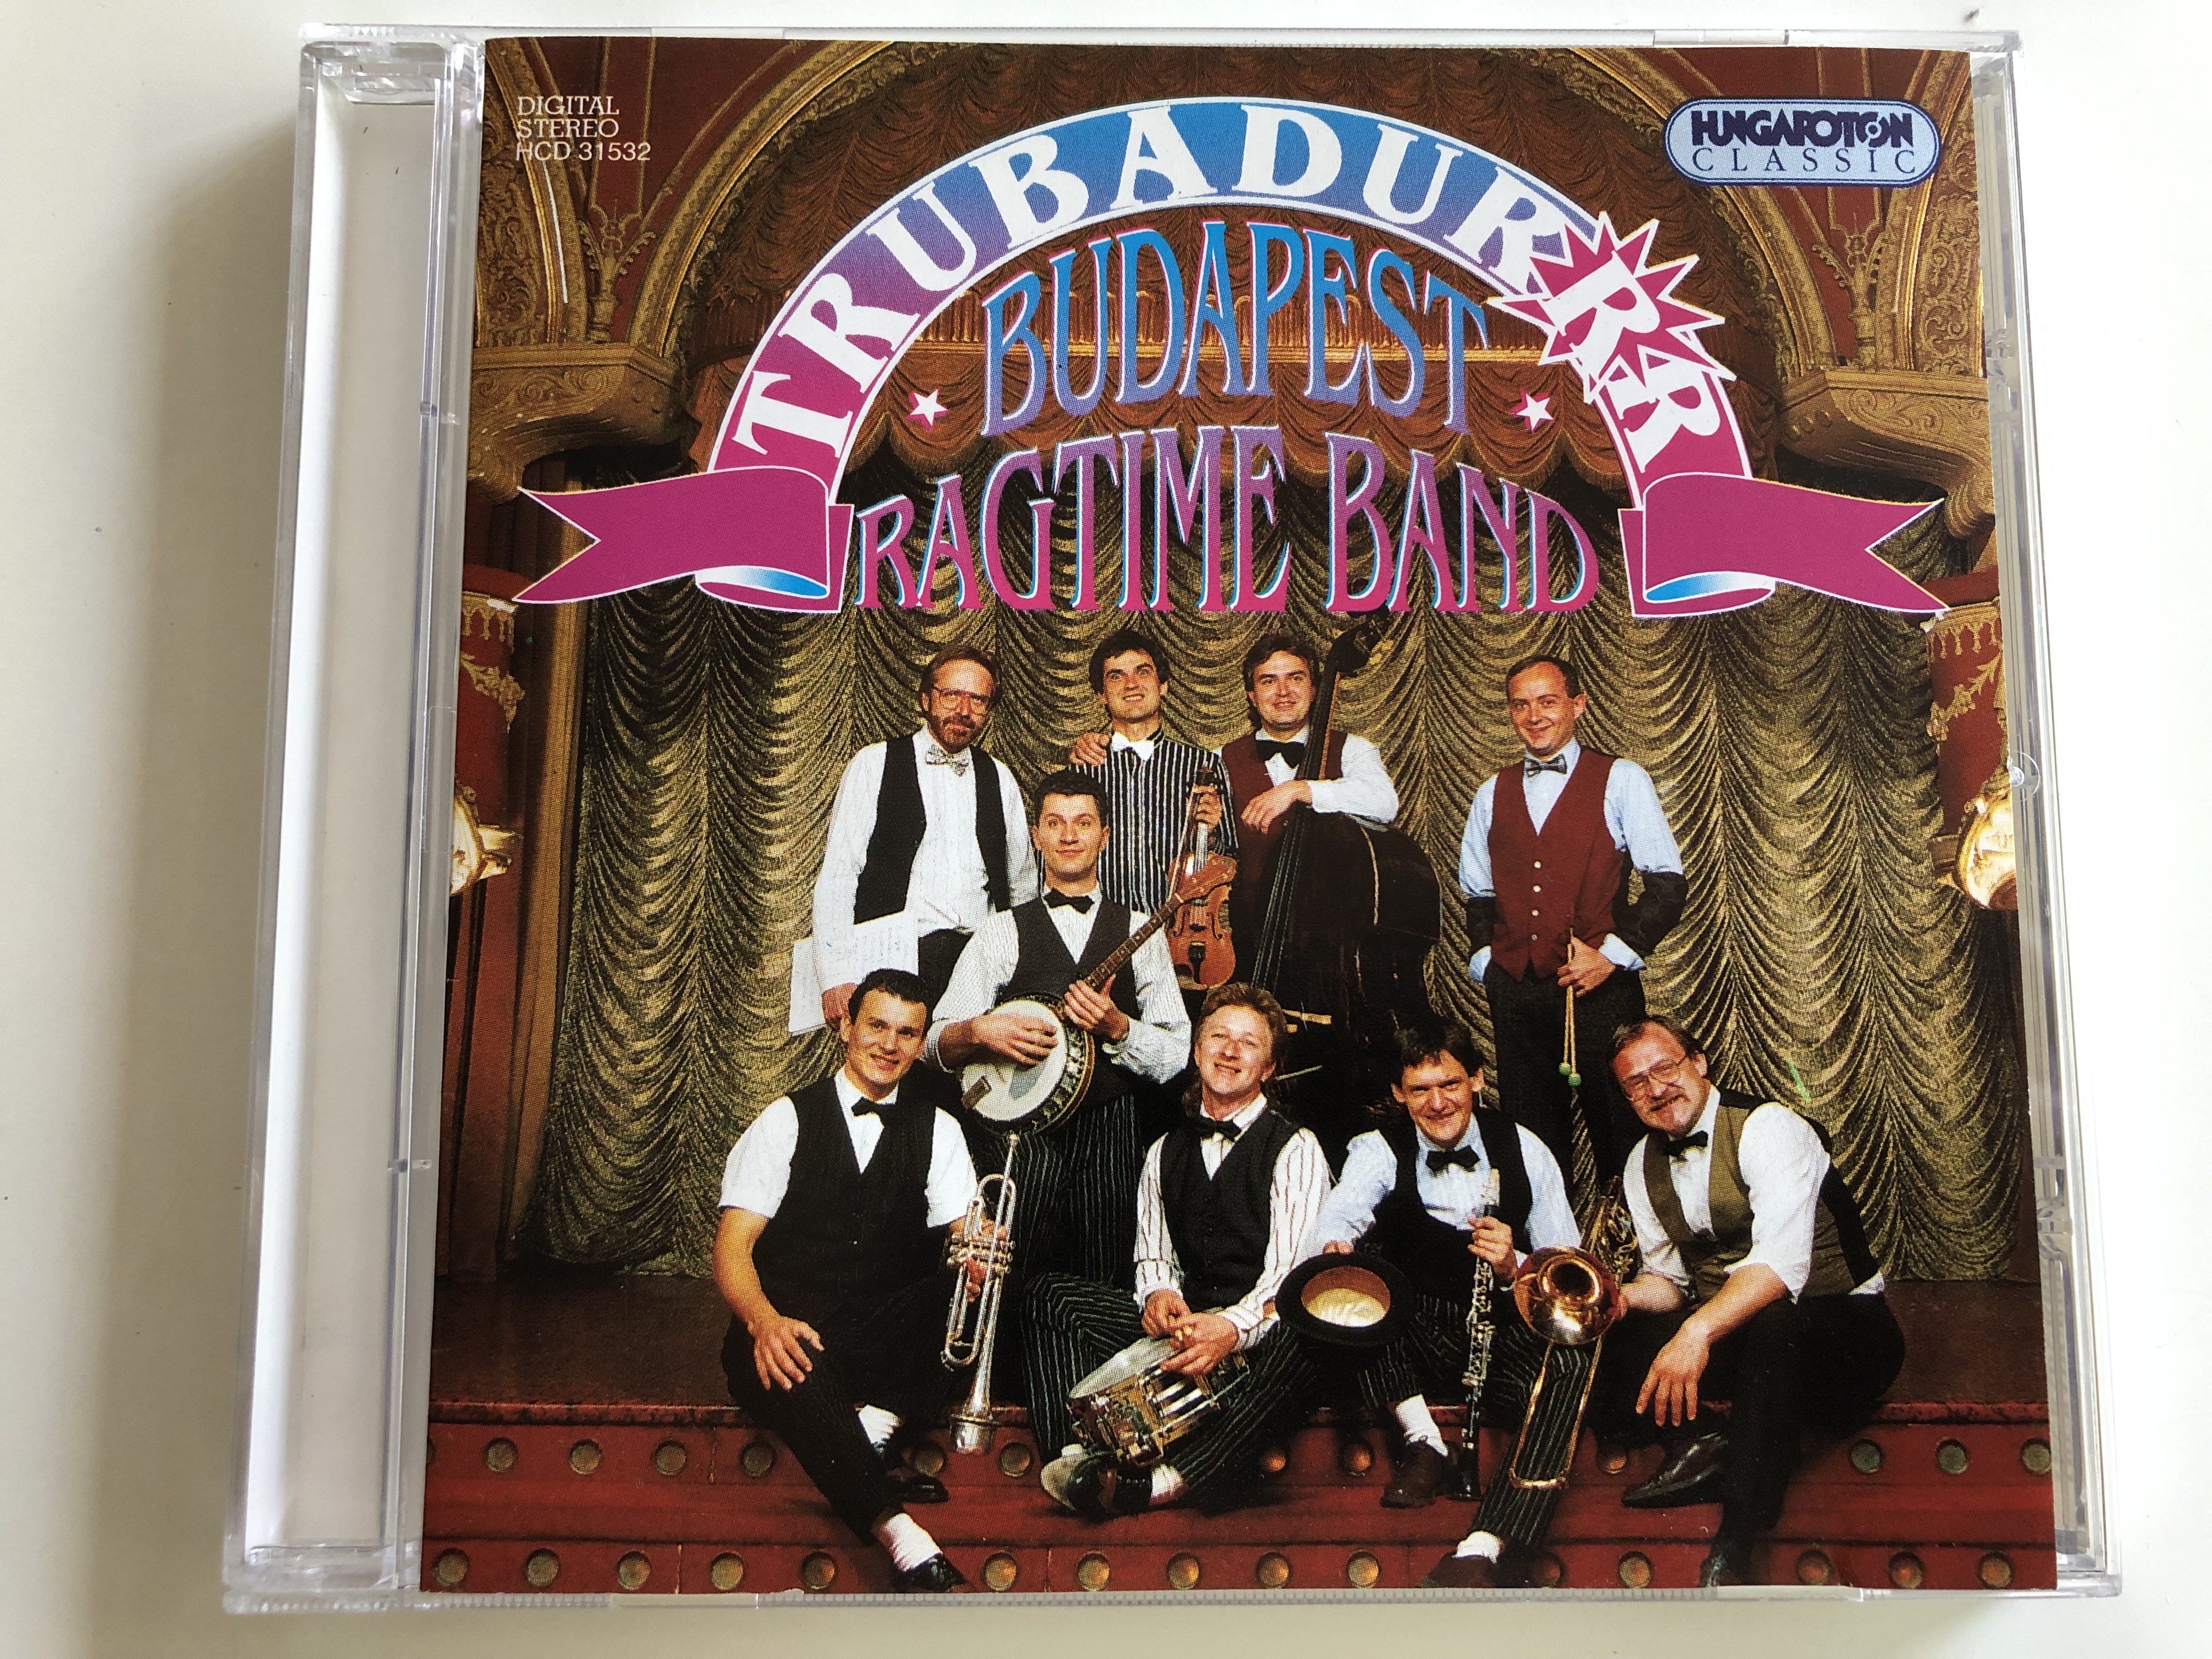 trubadurrr-budapest-ragtime-band-hungaroton-audio-cd-stereo-1995-hcd-31532-2-.jpg